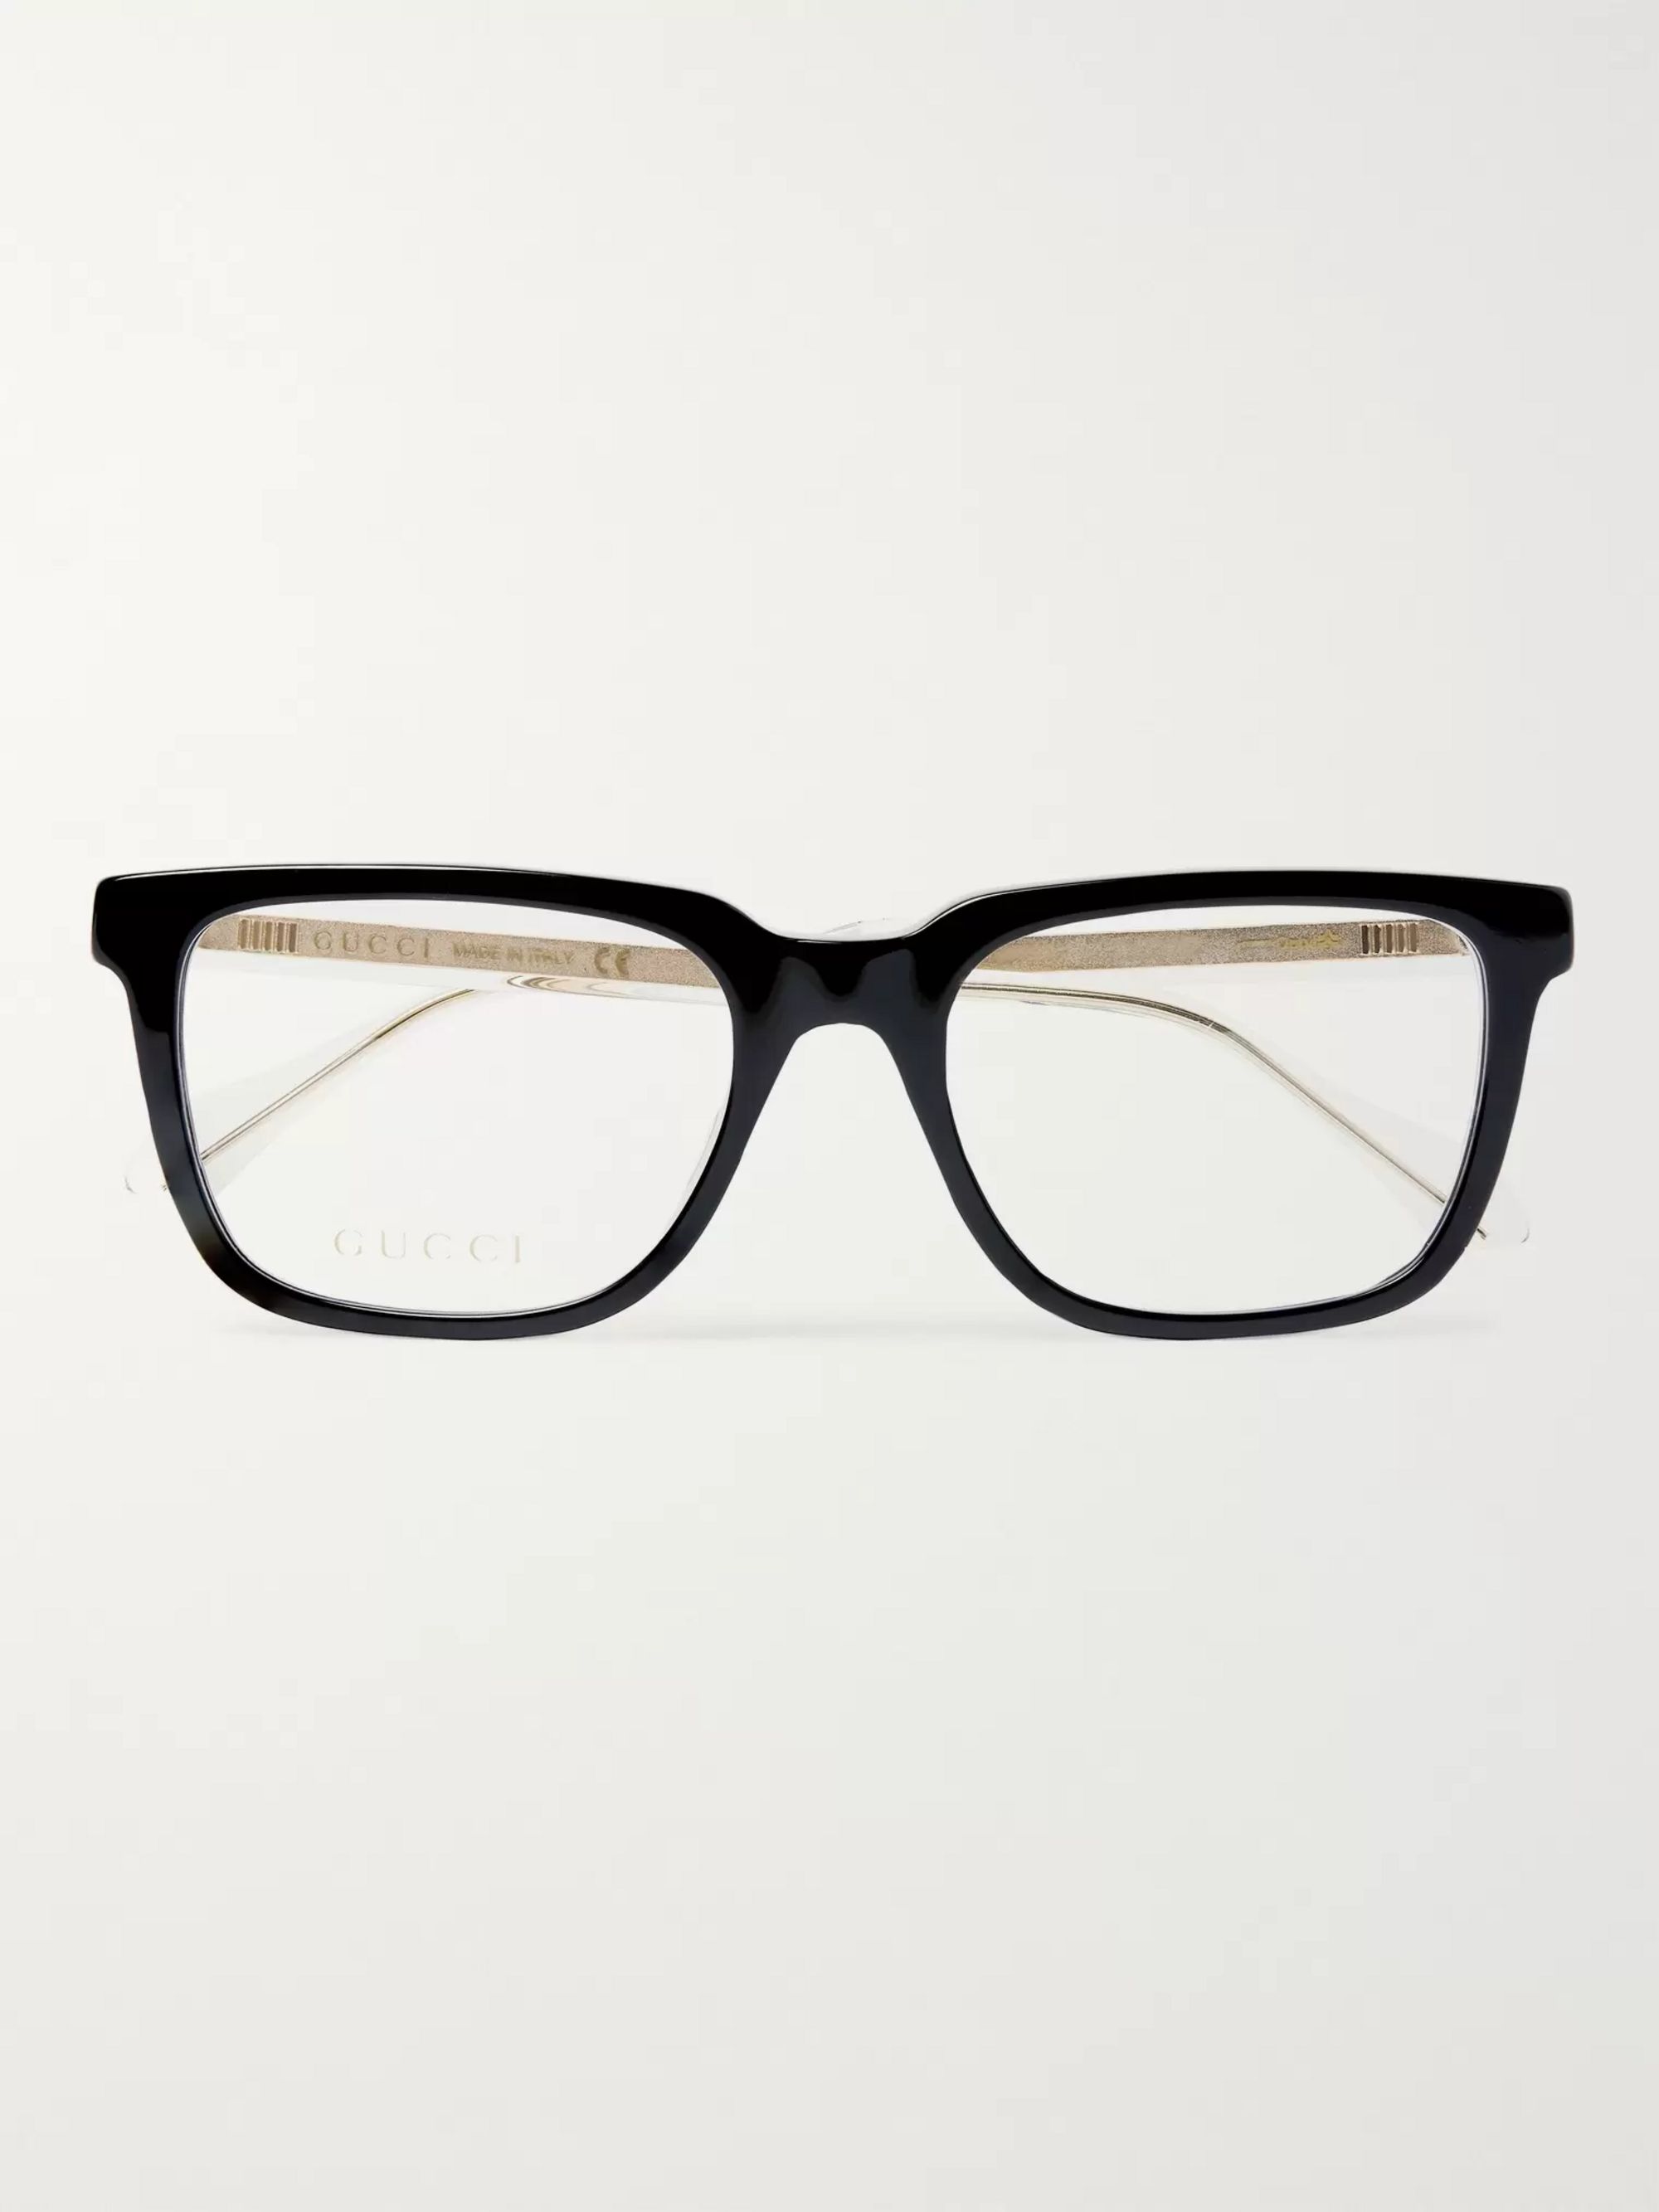 gucci glasses frames gold